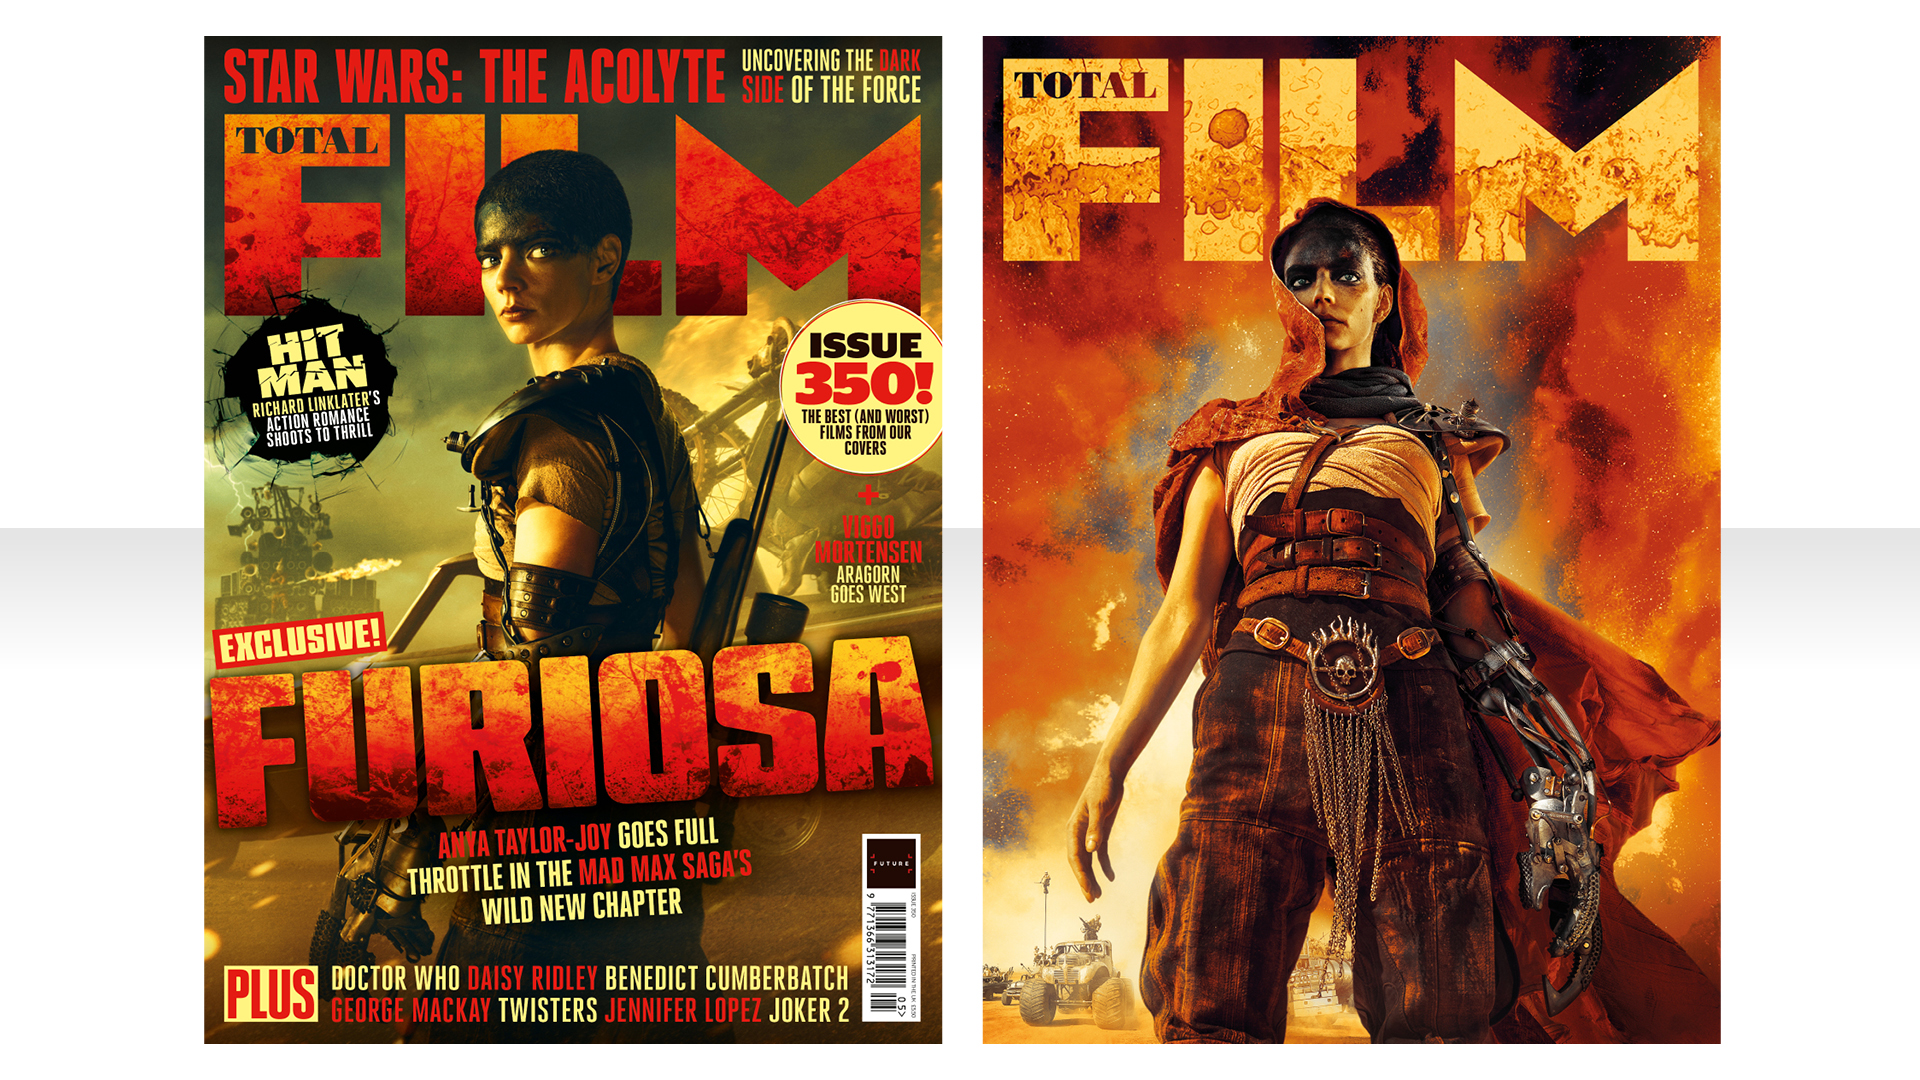 Total Movie's Furiosa: A Inflamed Max Saga covers